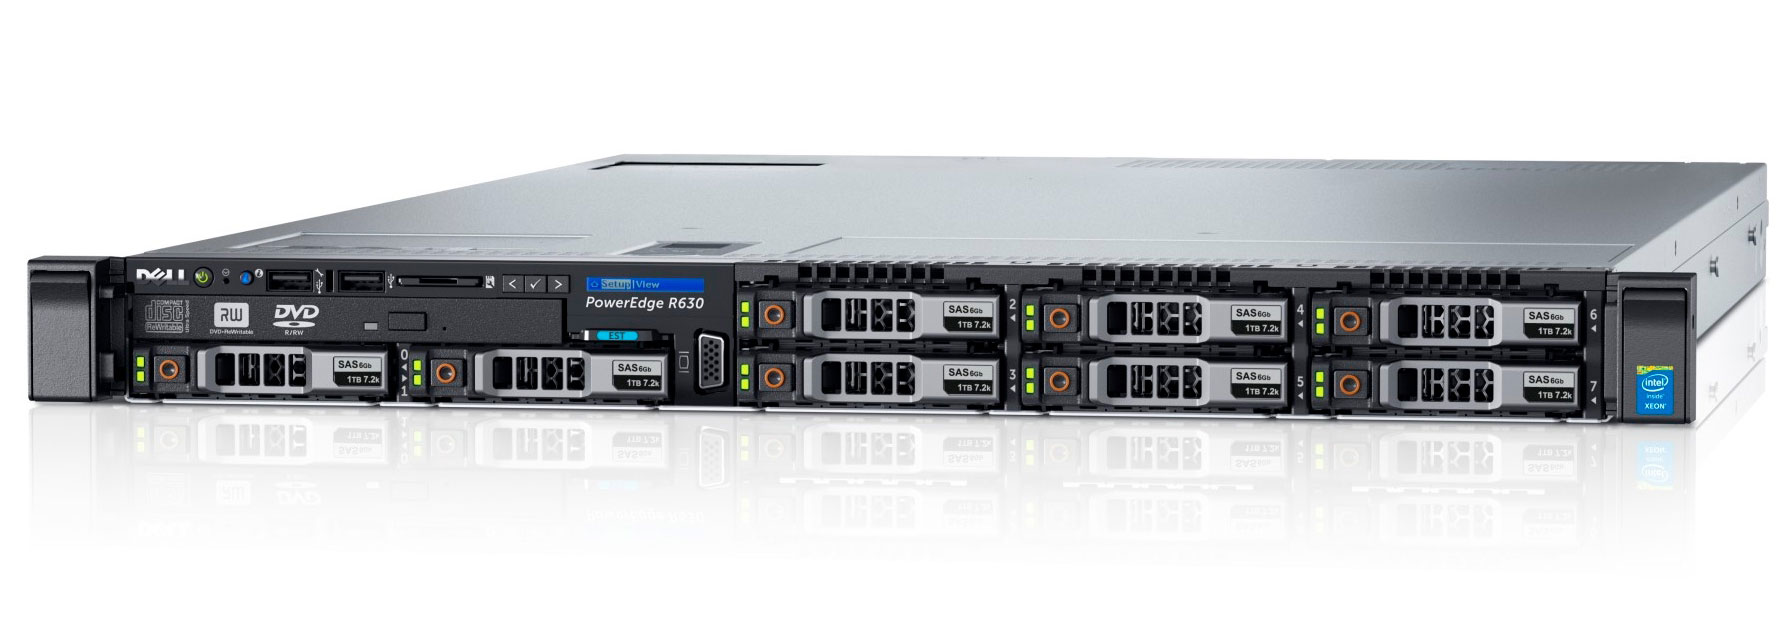 Подробное фото Сервер DELL PowerEdge R630 Xeon 2x E5-2637v3 64Gb 2133P DDR4 8x noHDD 2.5", SAS RAID Perc H730, 1024Mb, DVD, 2*PSU